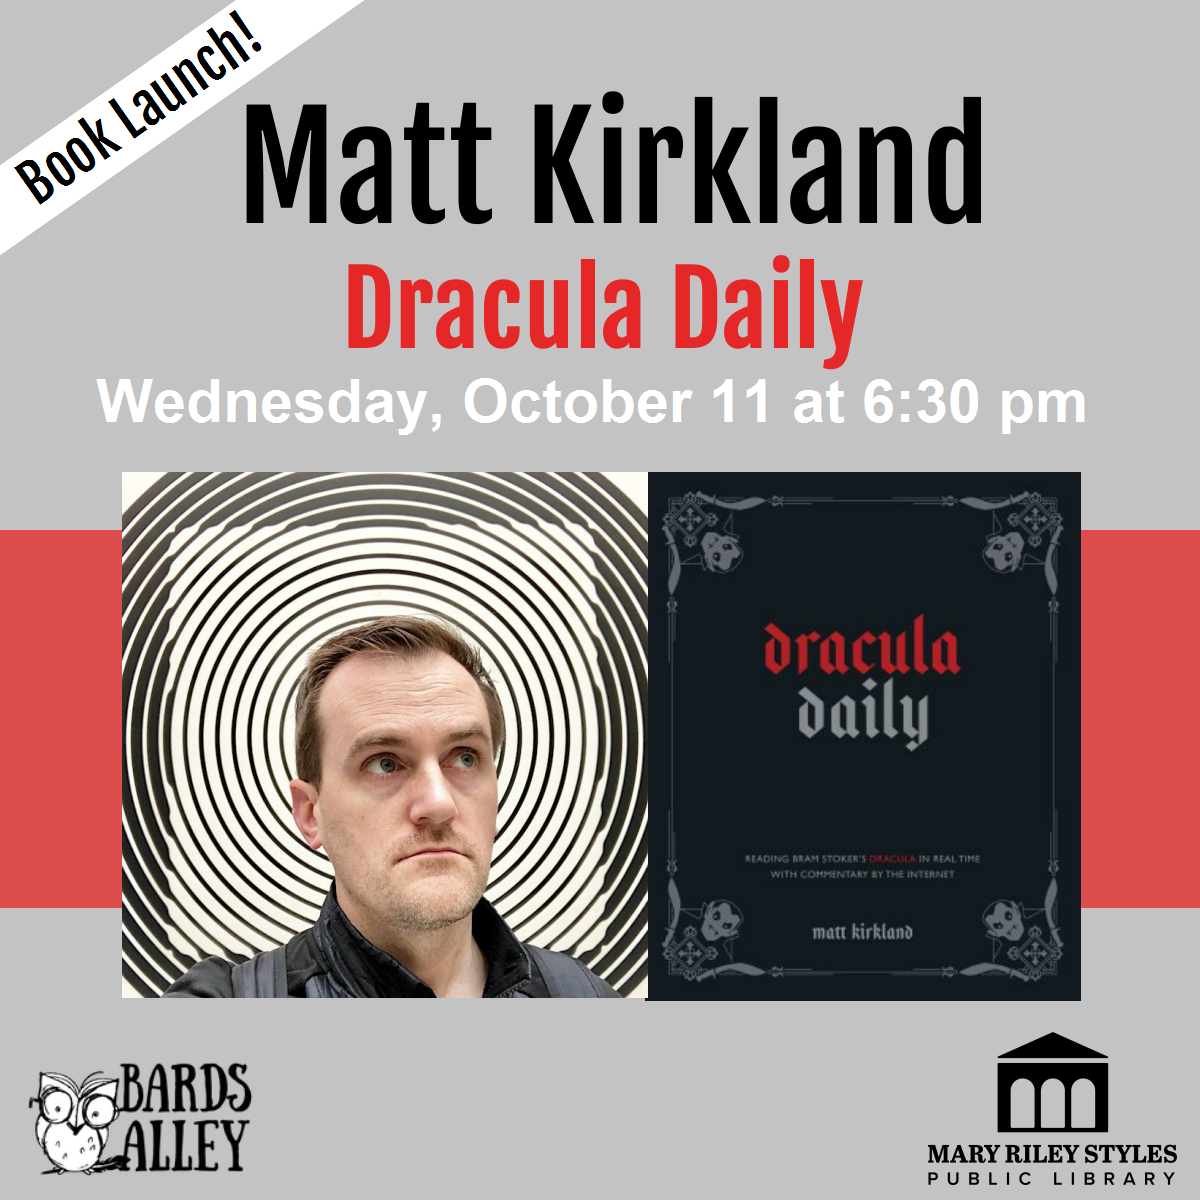 Book launch for Matt Kirkland & Dracula Daily